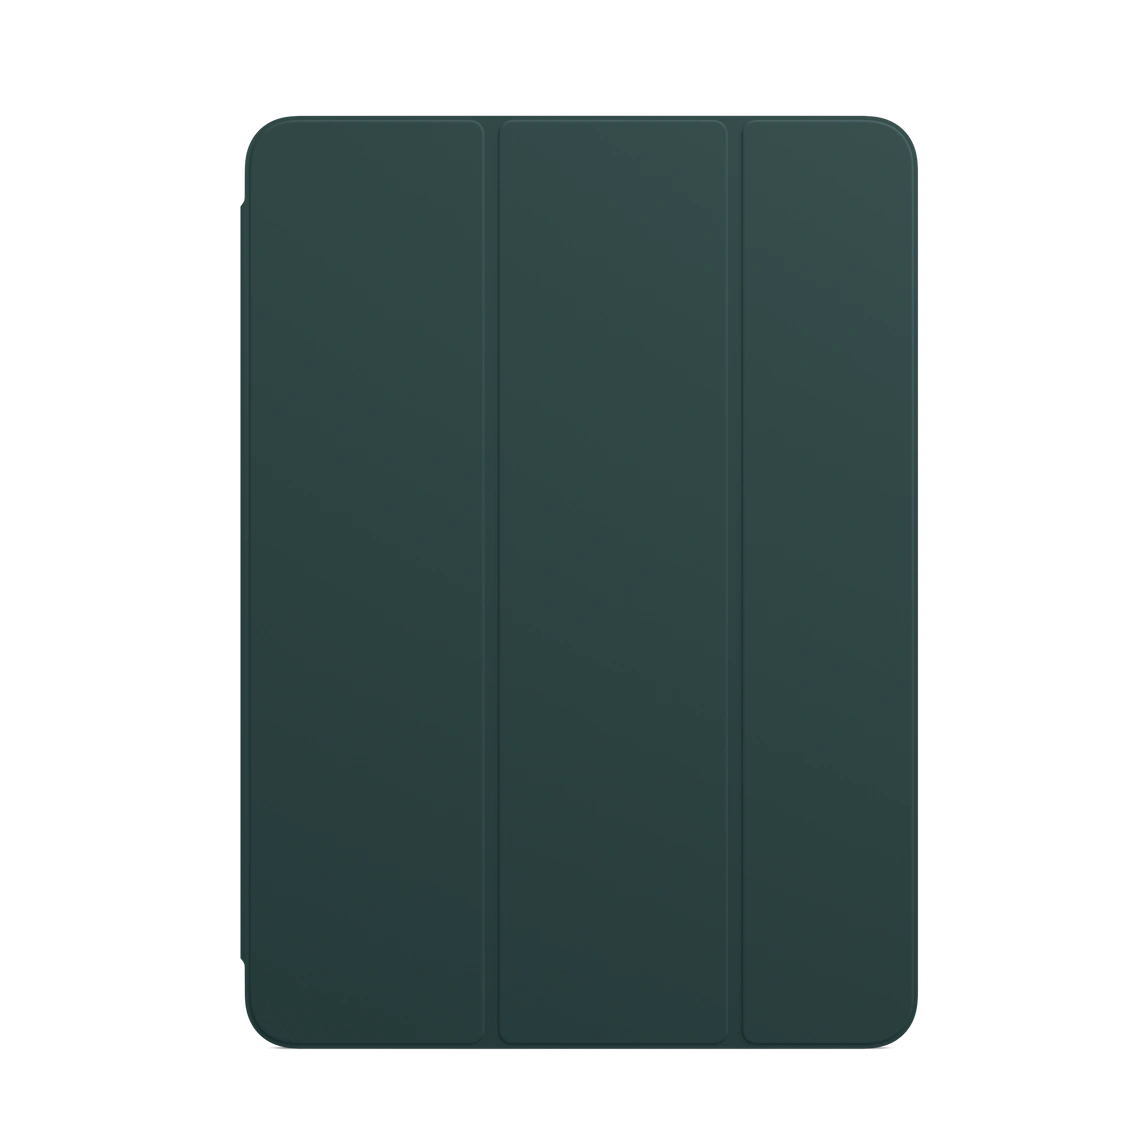 Apple Smart Folio for iPad Pro 11-inch